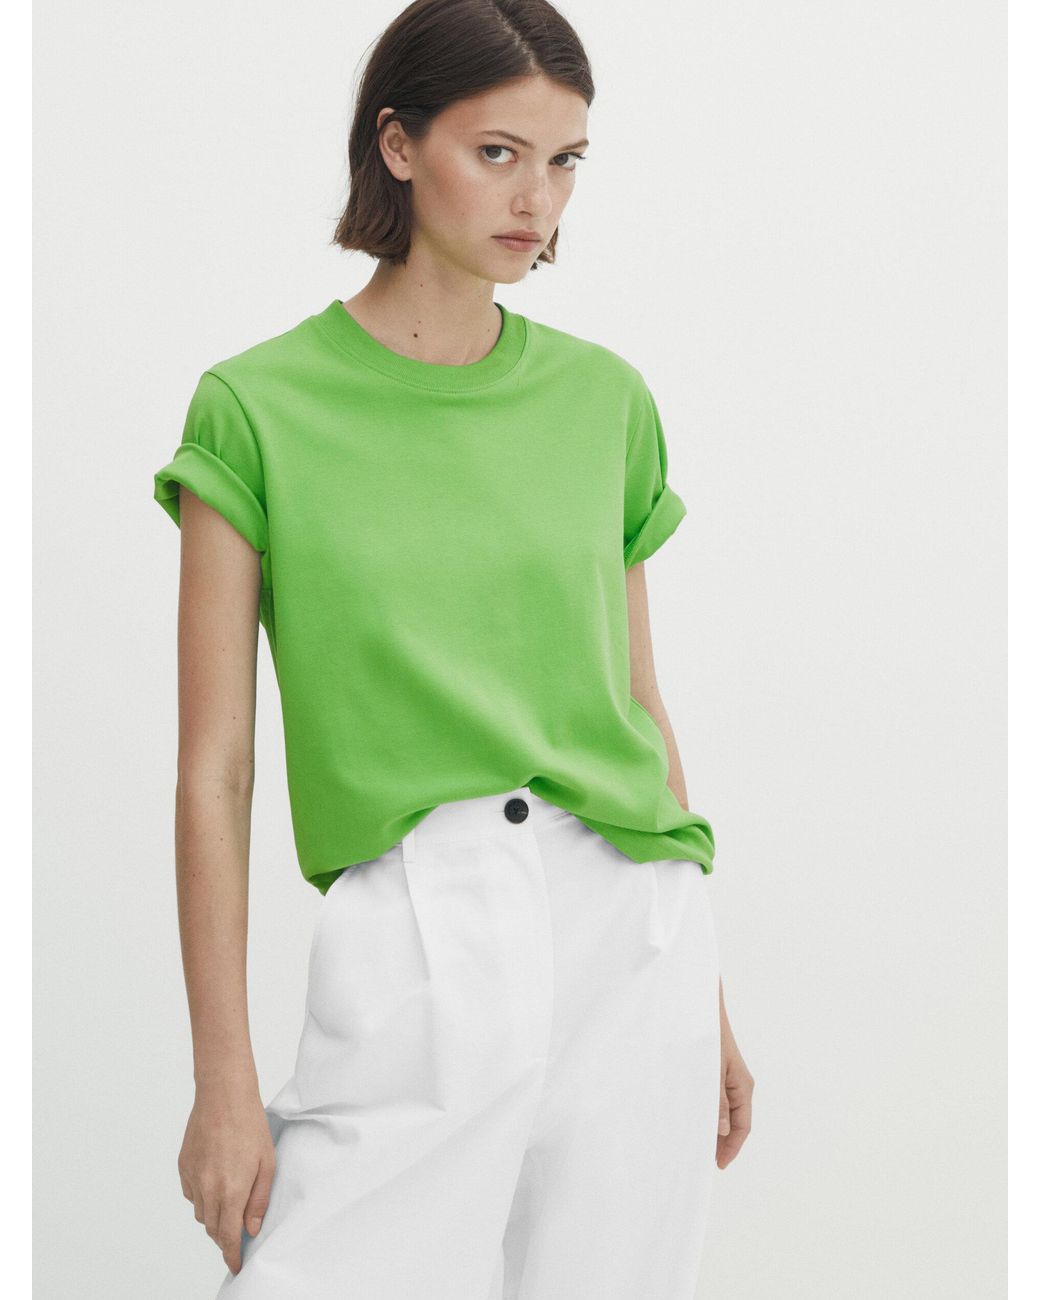 MASSIMO DUTTI Short Sleeve Cotton T-Shirt in Green | Lyst